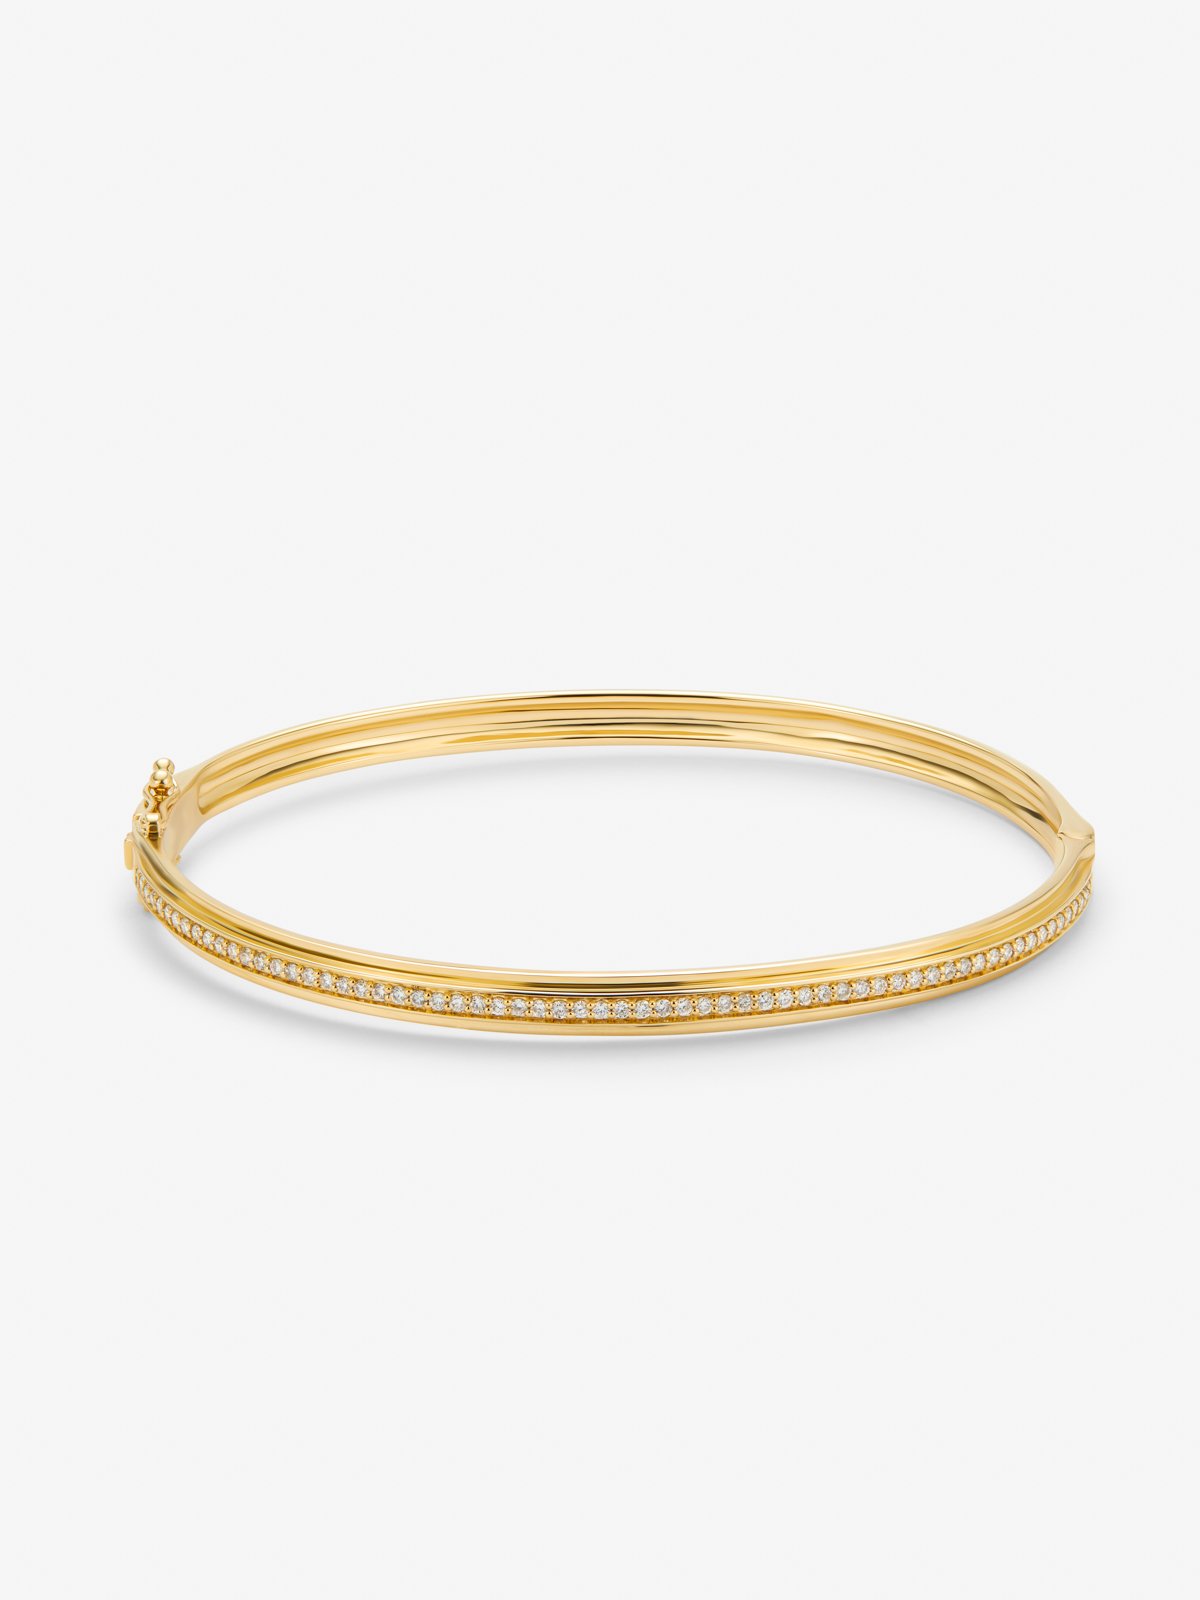 Rigid 18K yellow gold bracelet with 0.38 ct brilliant-cut diamonds